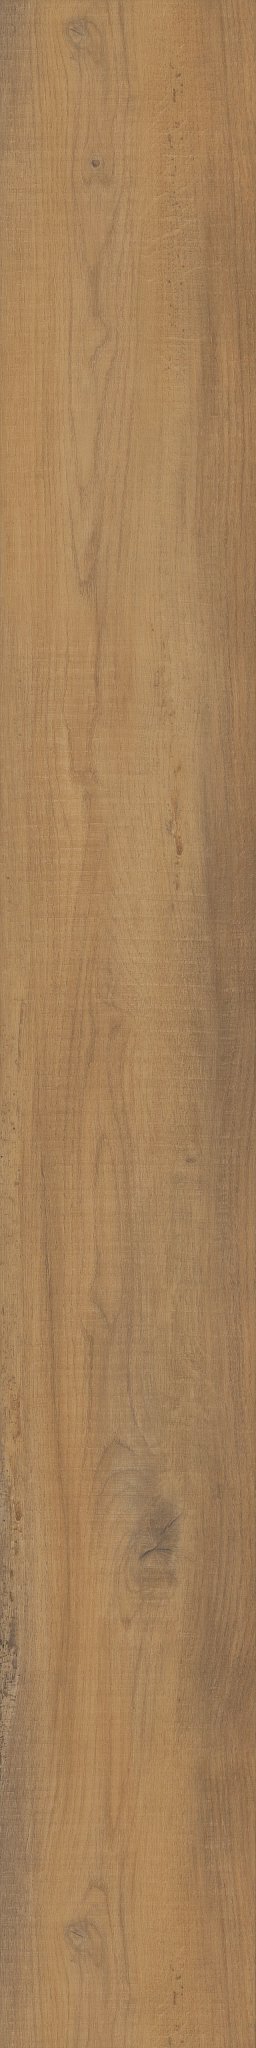 coretec originals premium vv457 vv457 - virtue oak Costco